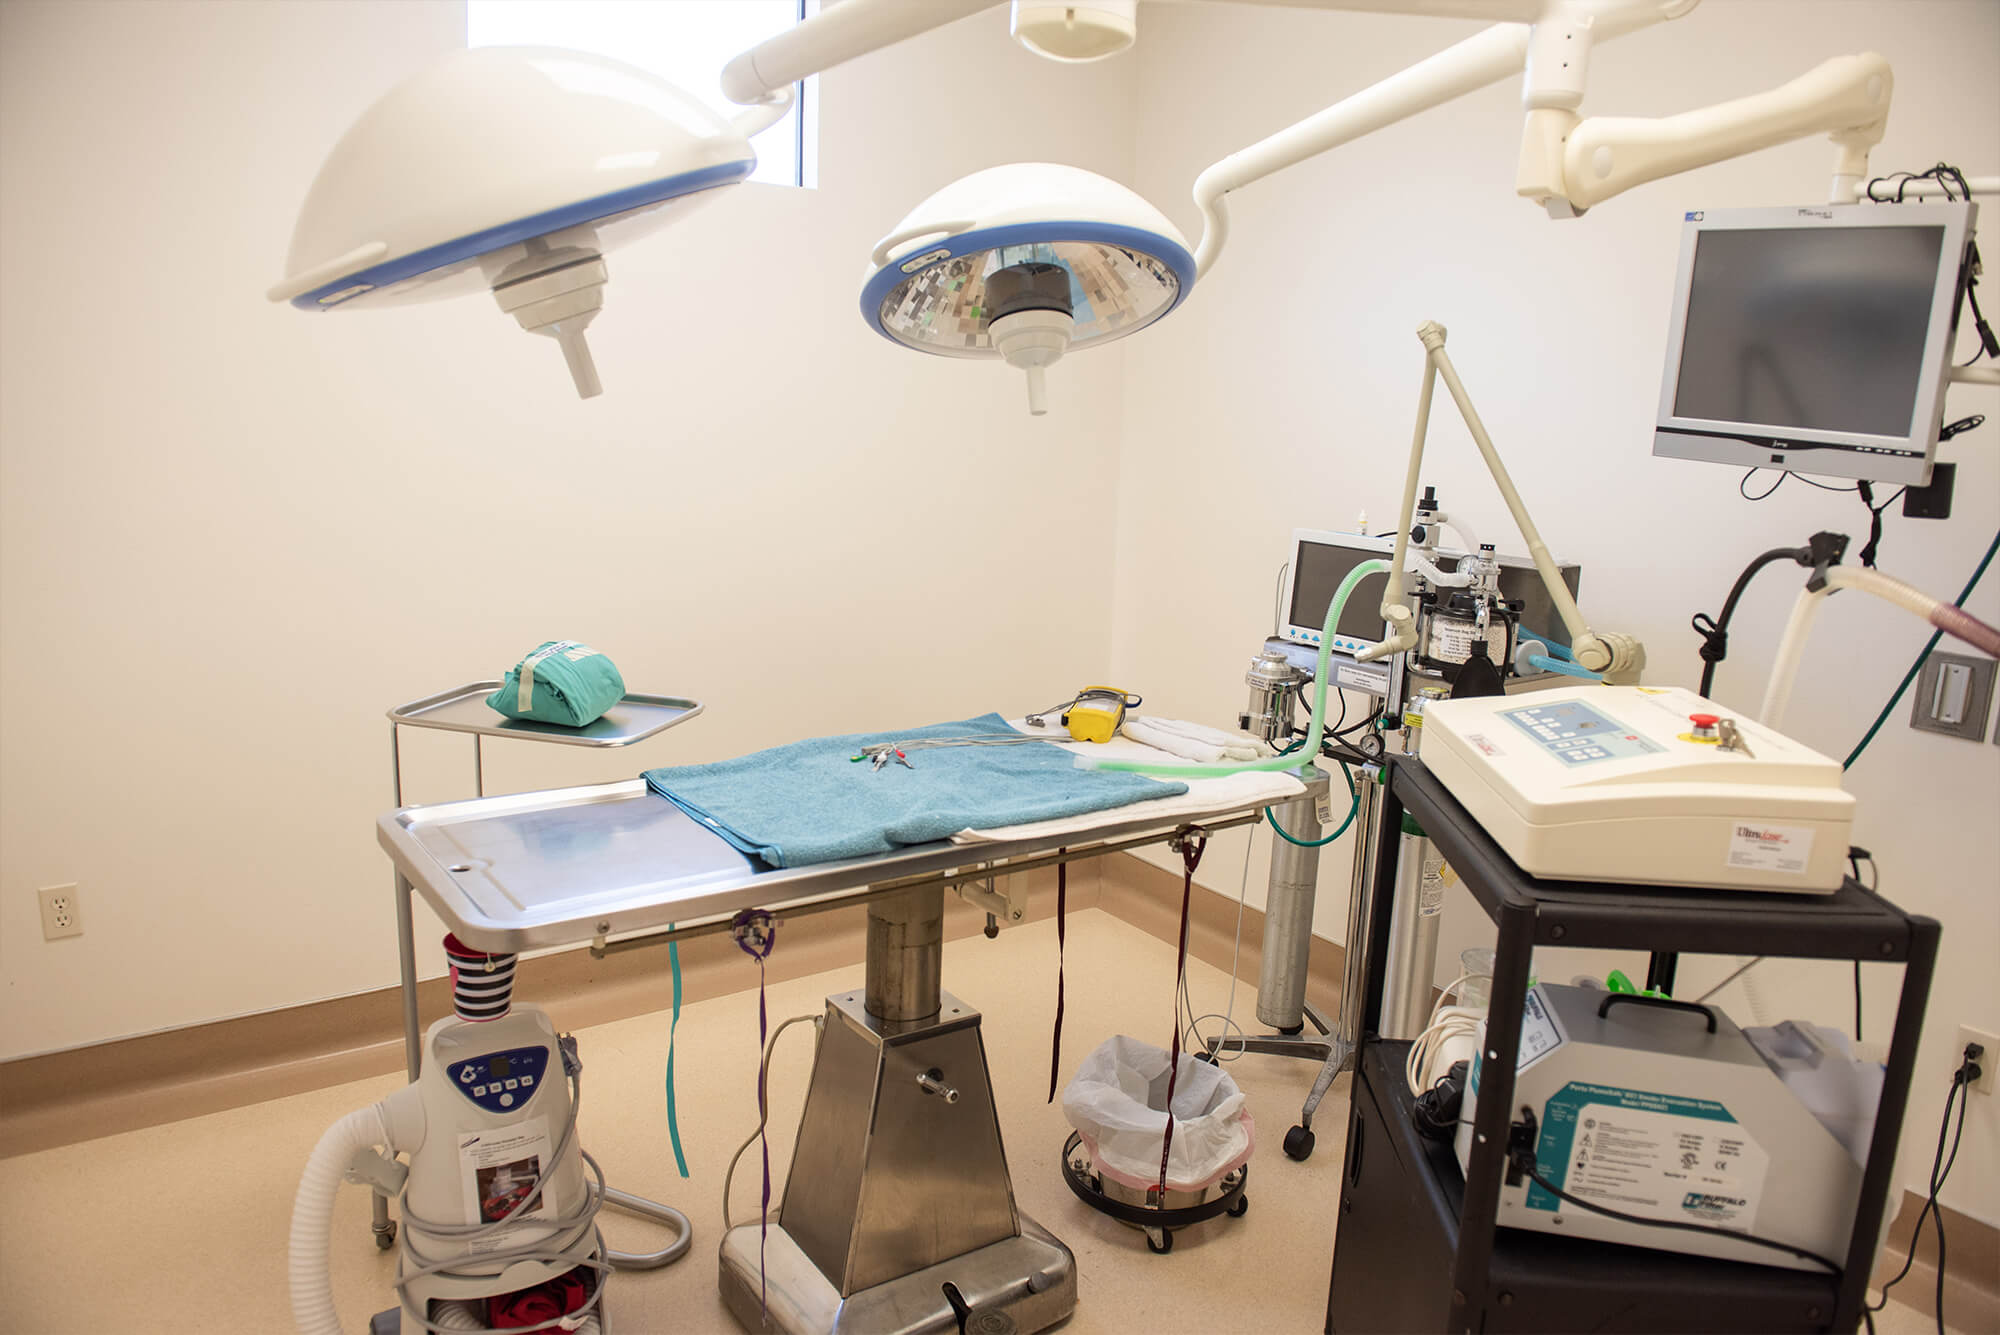 Laguna Beach Veterinary Medical Center - Veterinary Services - Surgical Center - Diagnostic Imaging